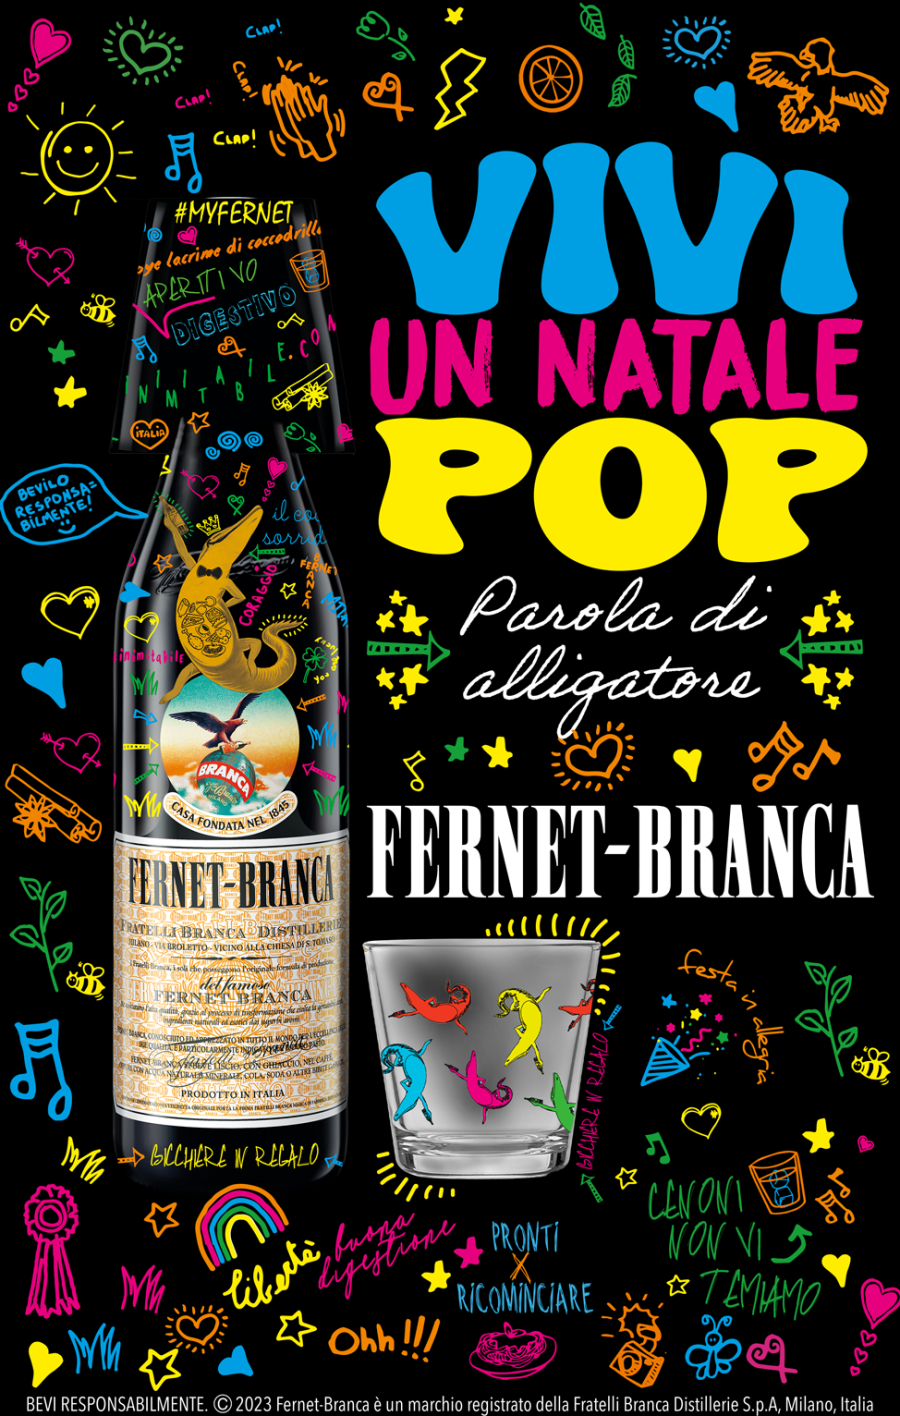 Fernet-Branca. Inimitabile like you since 1845!